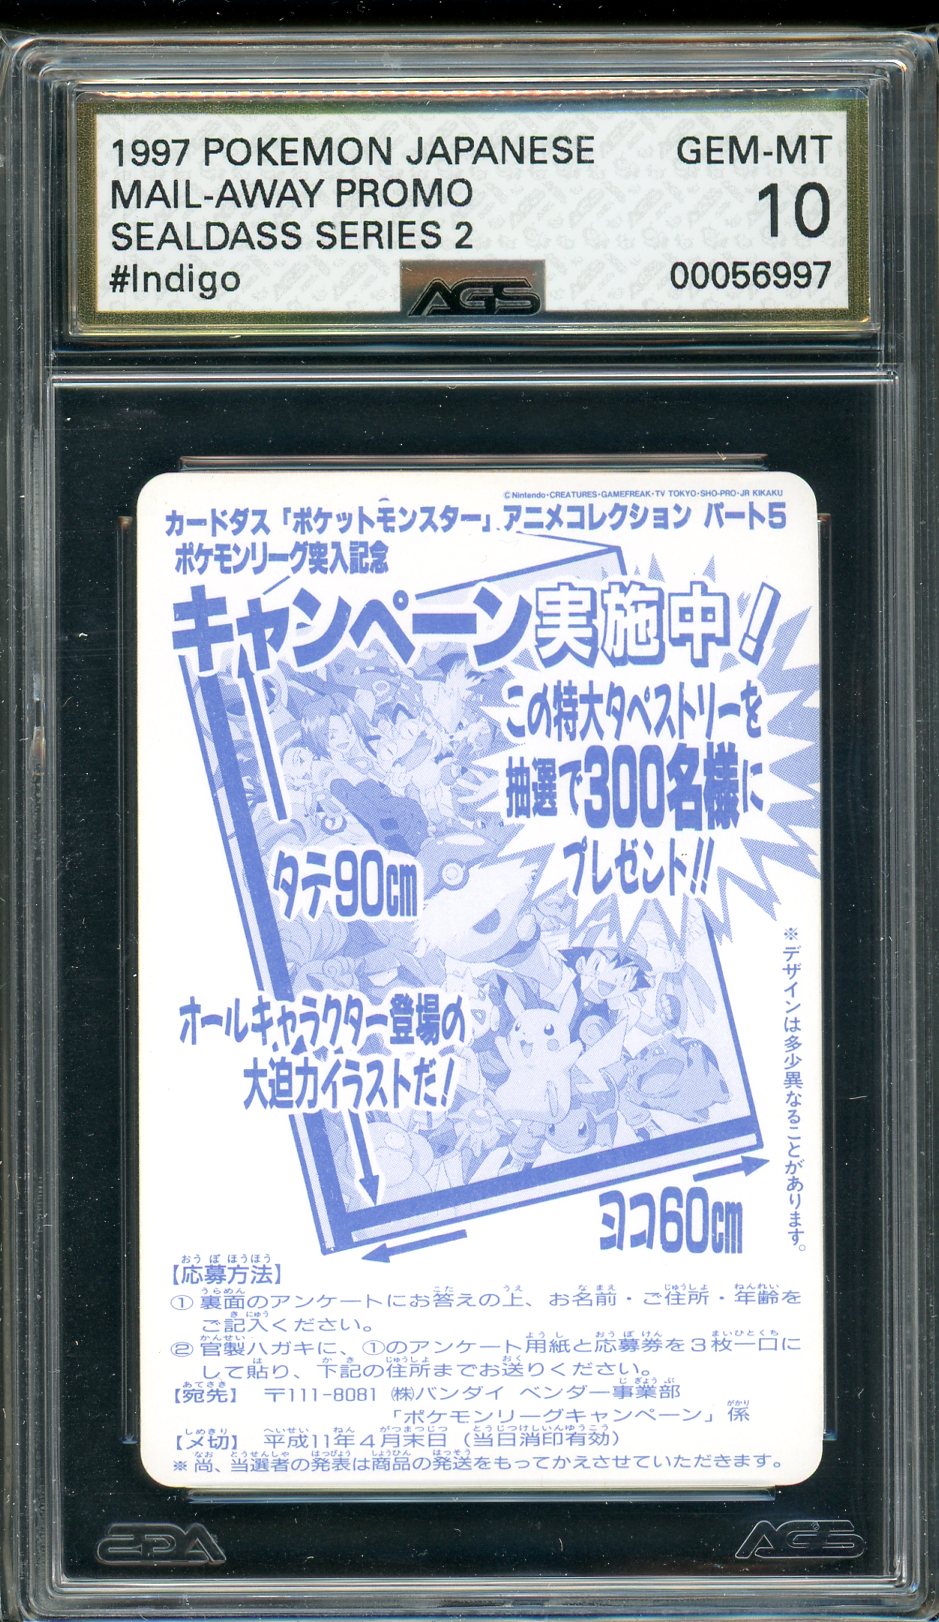 AGS (GEM-MT 10) Mail-Away Promo #Indigo (Japanese) - Sealdass (#00056997)